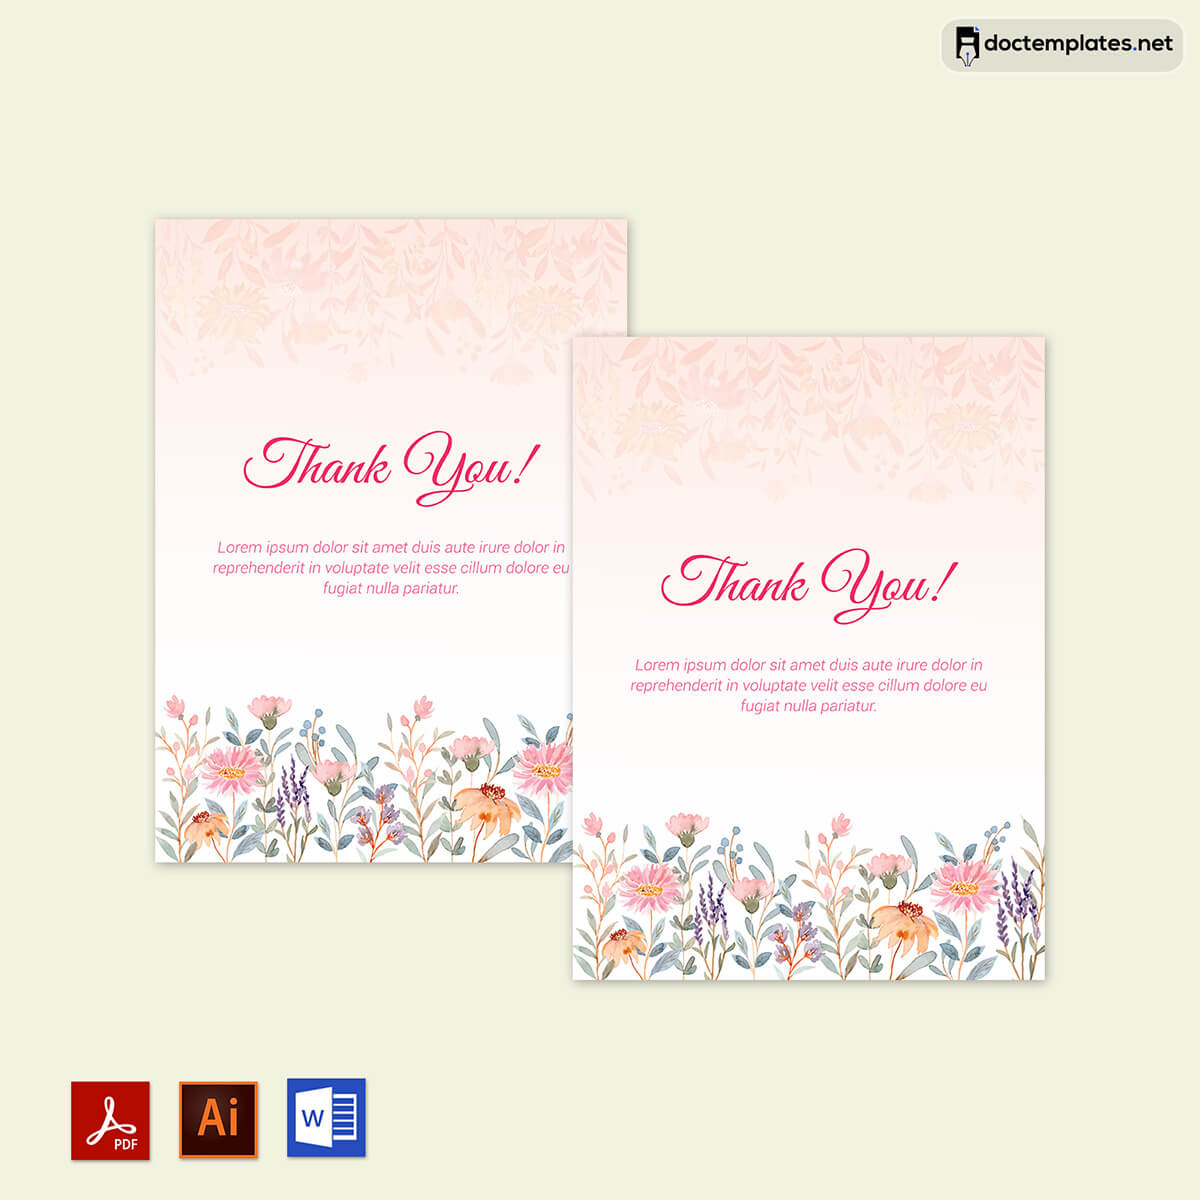 Image of Thank you card design
Thank you card design
